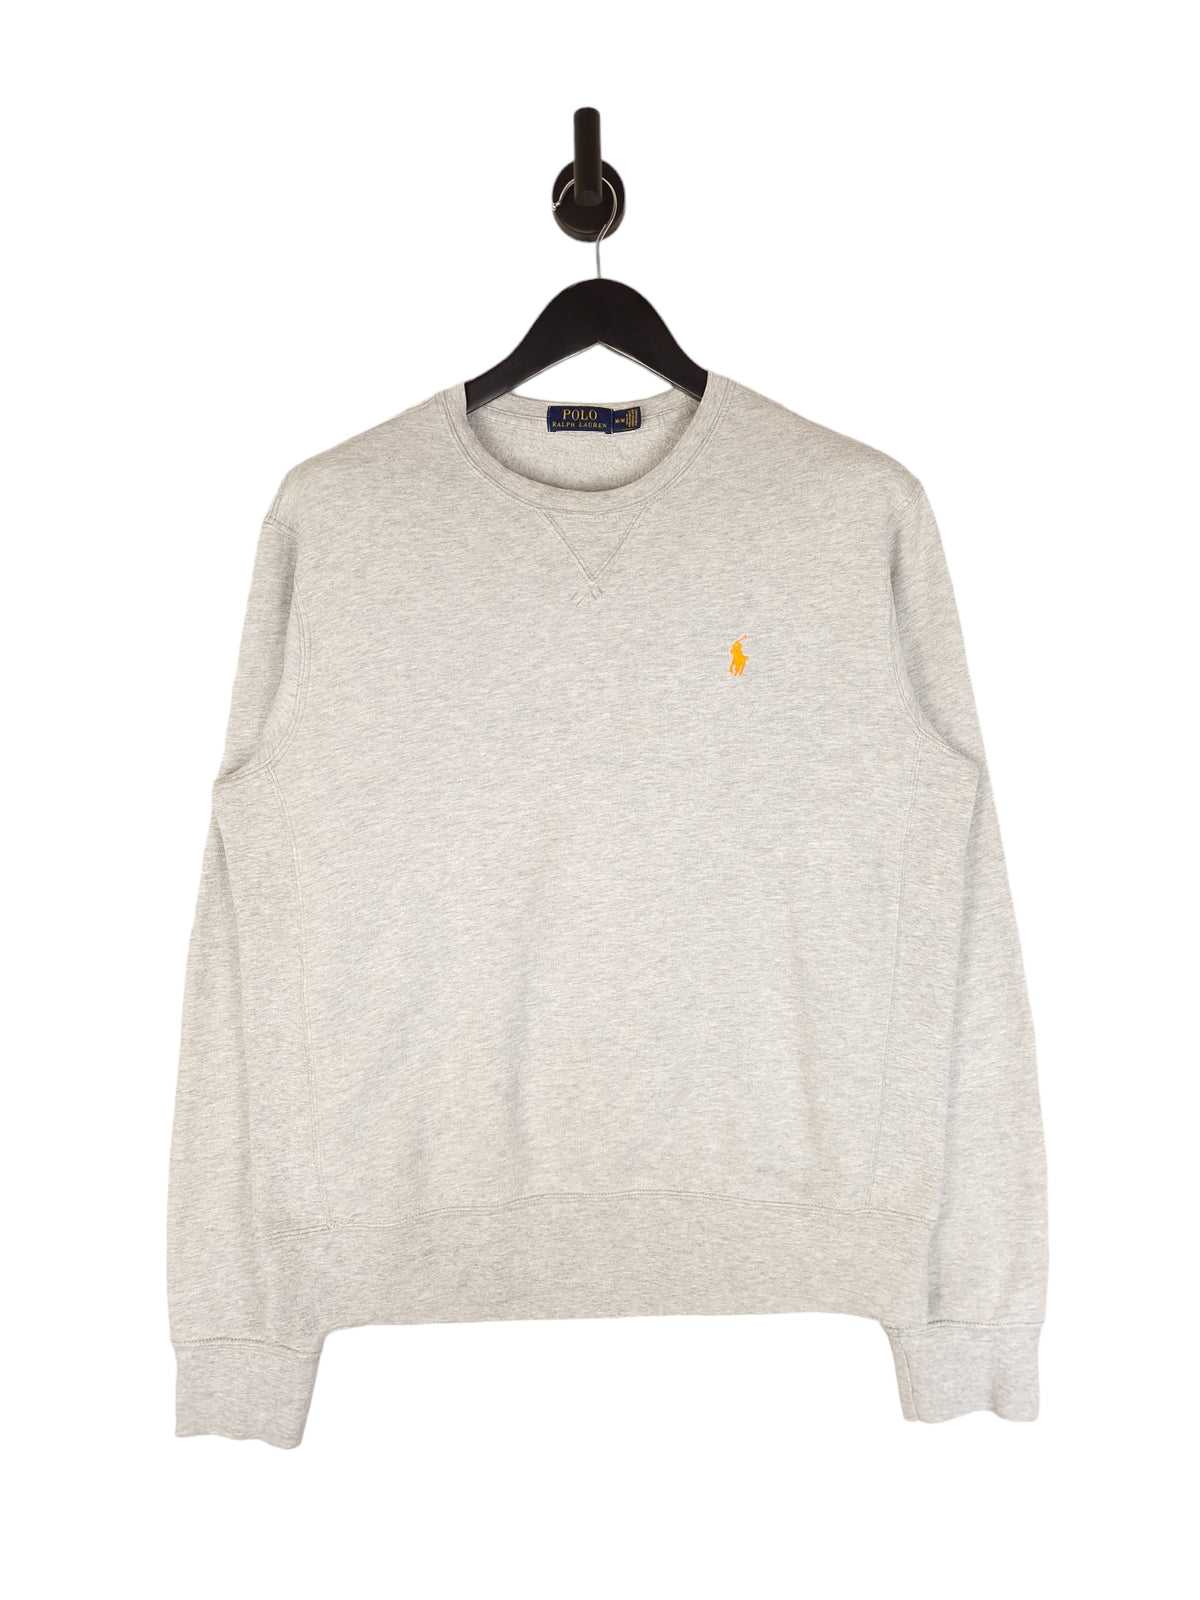 Polo Ralph Lauren Sweatshirt - Size Medium